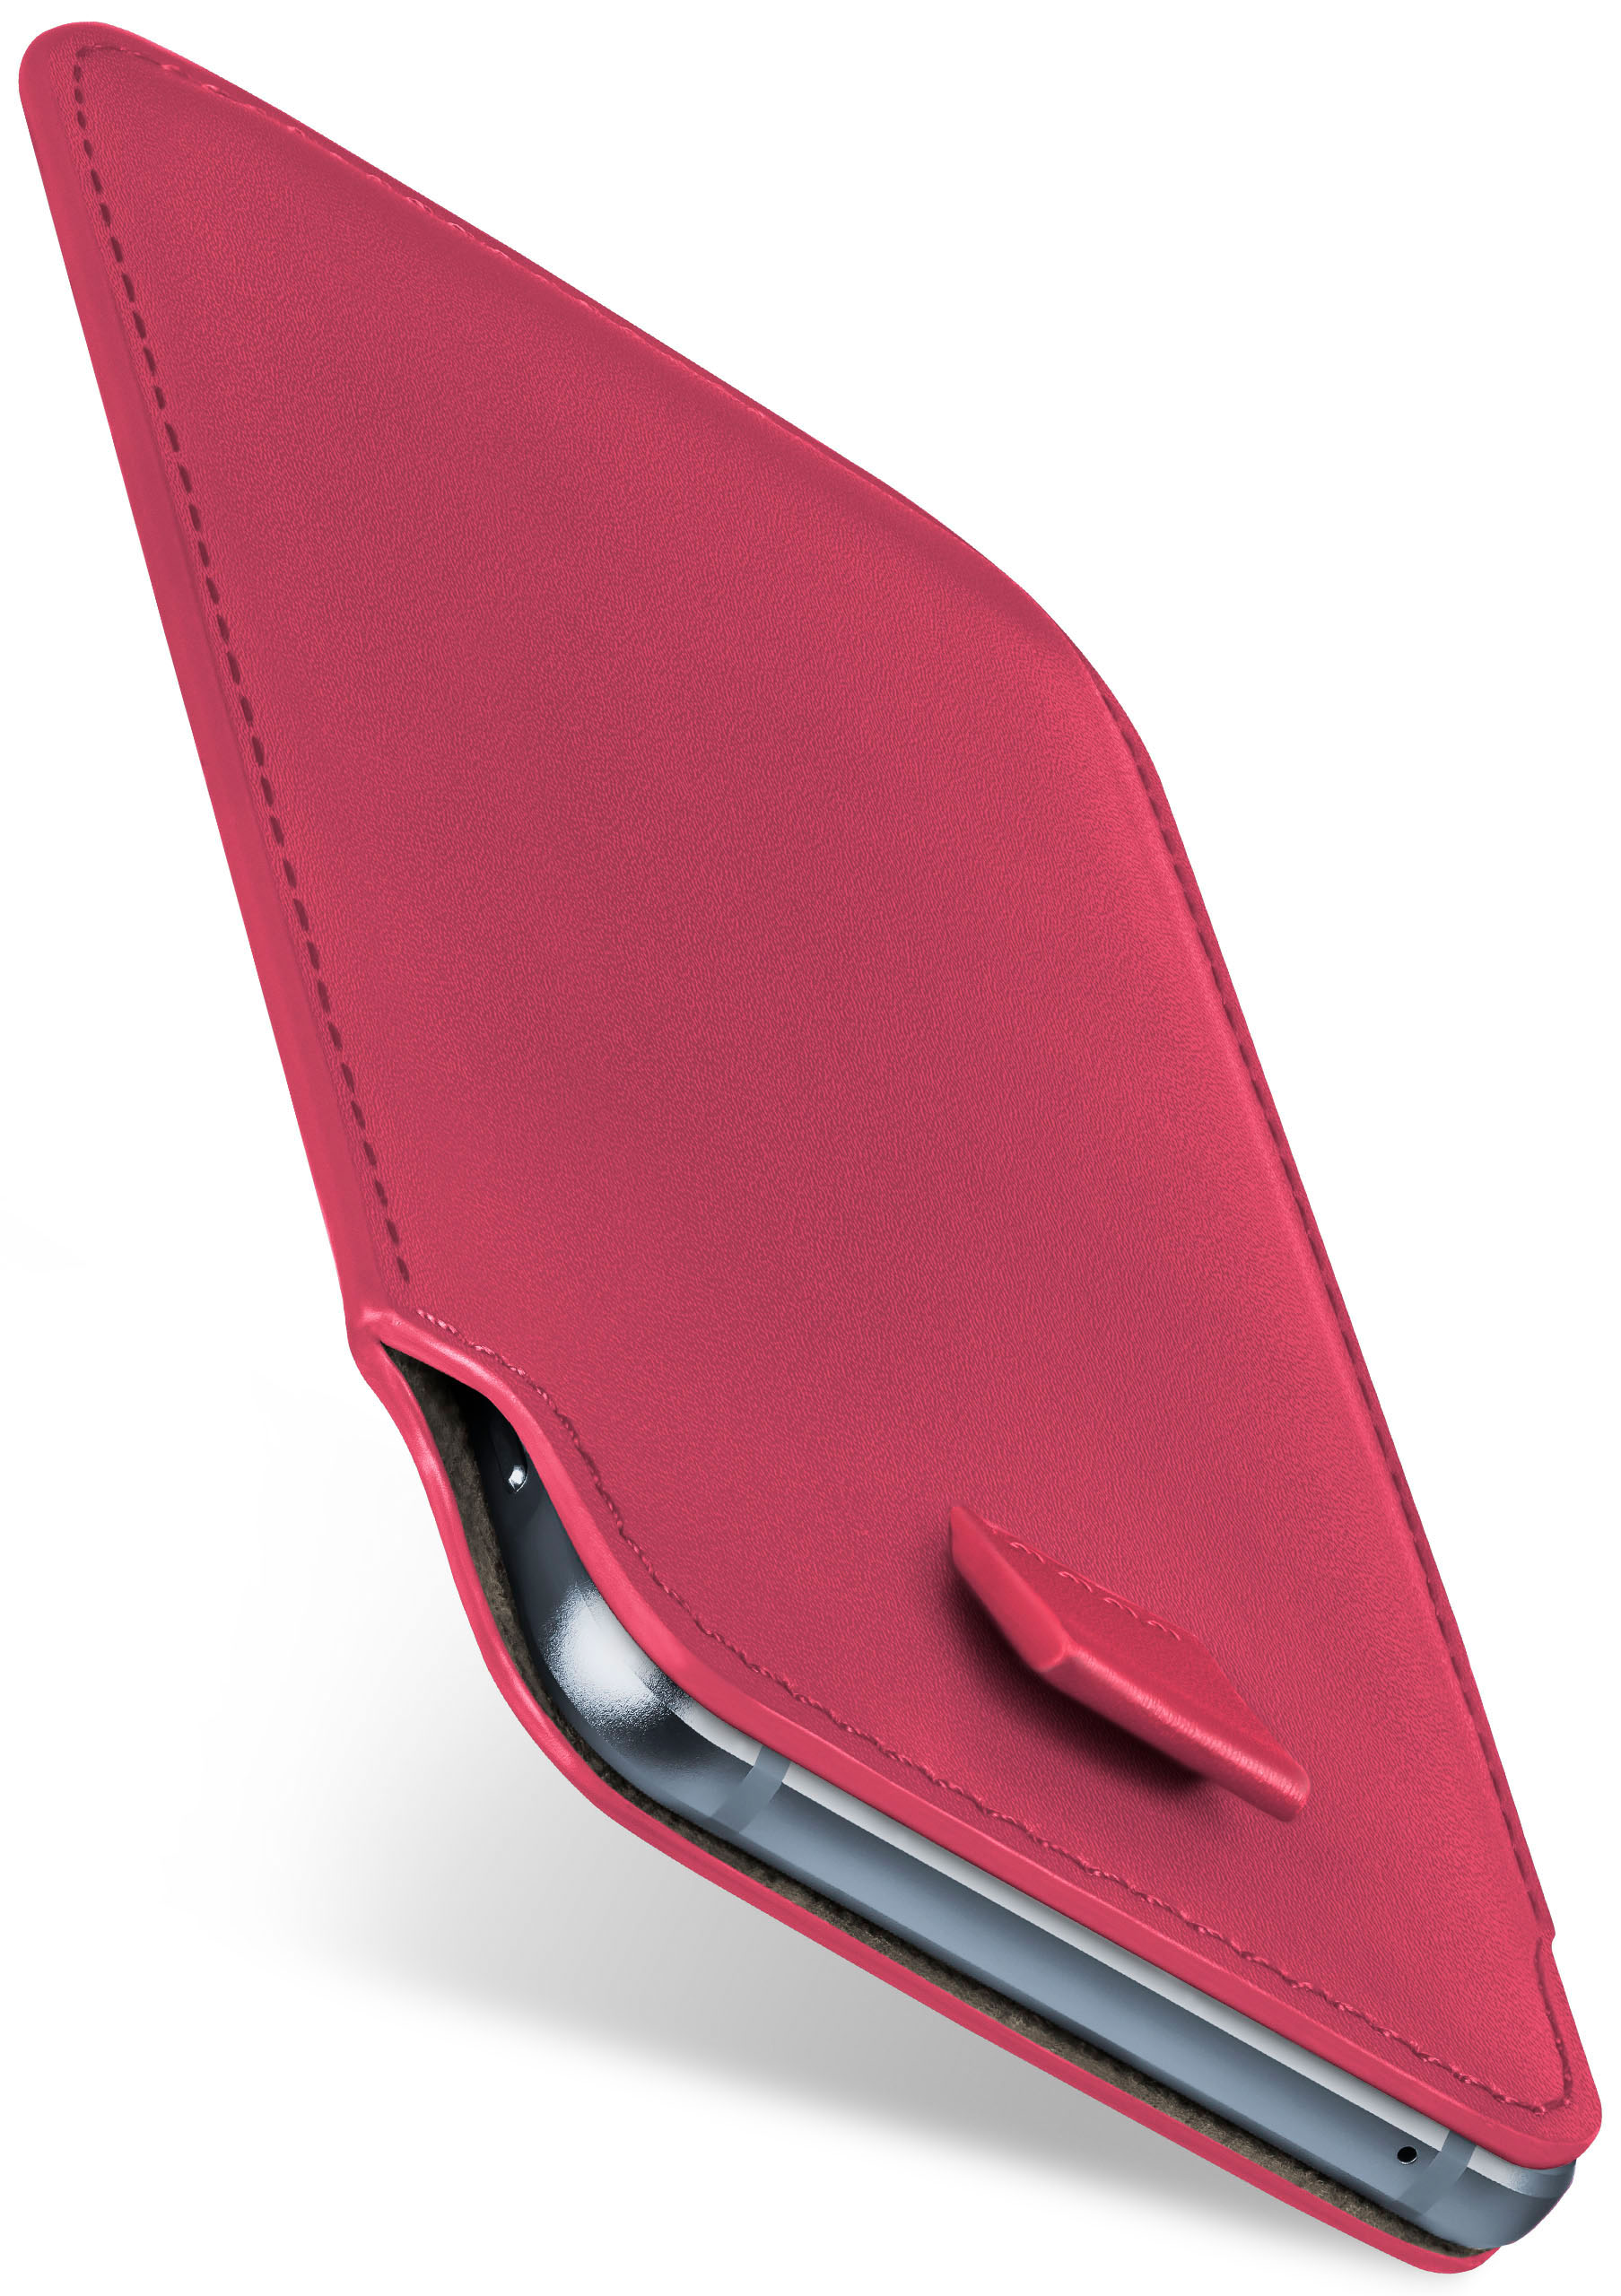 Cover, View2 Wiko, Full Pro, Berry-Fuchsia Slide MOEX Case,